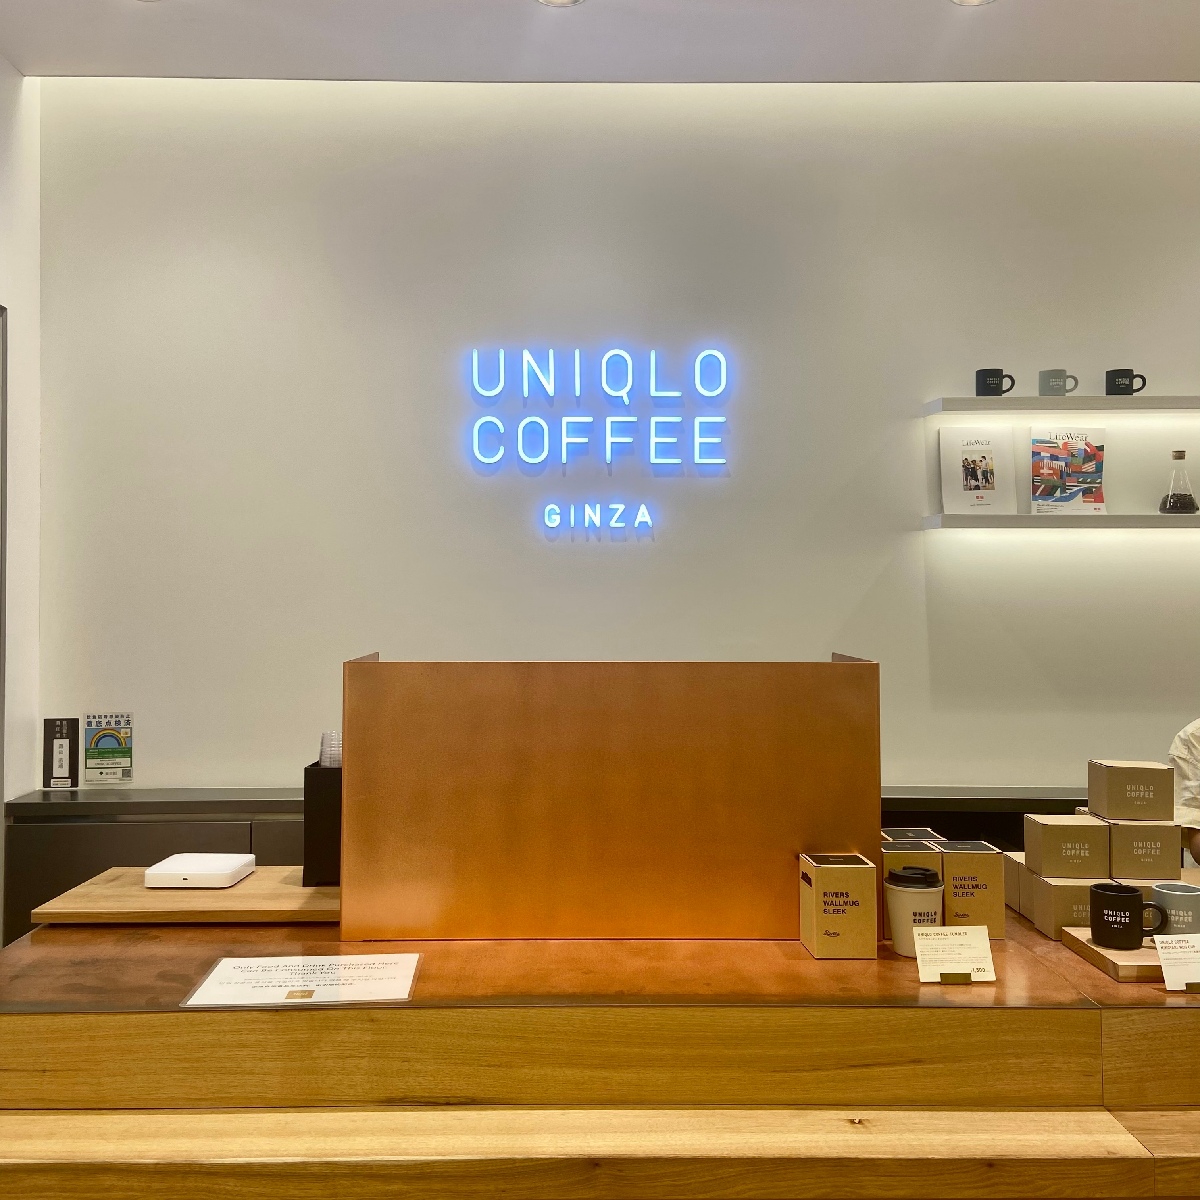 《UNIQLO COFFEE》世界初の